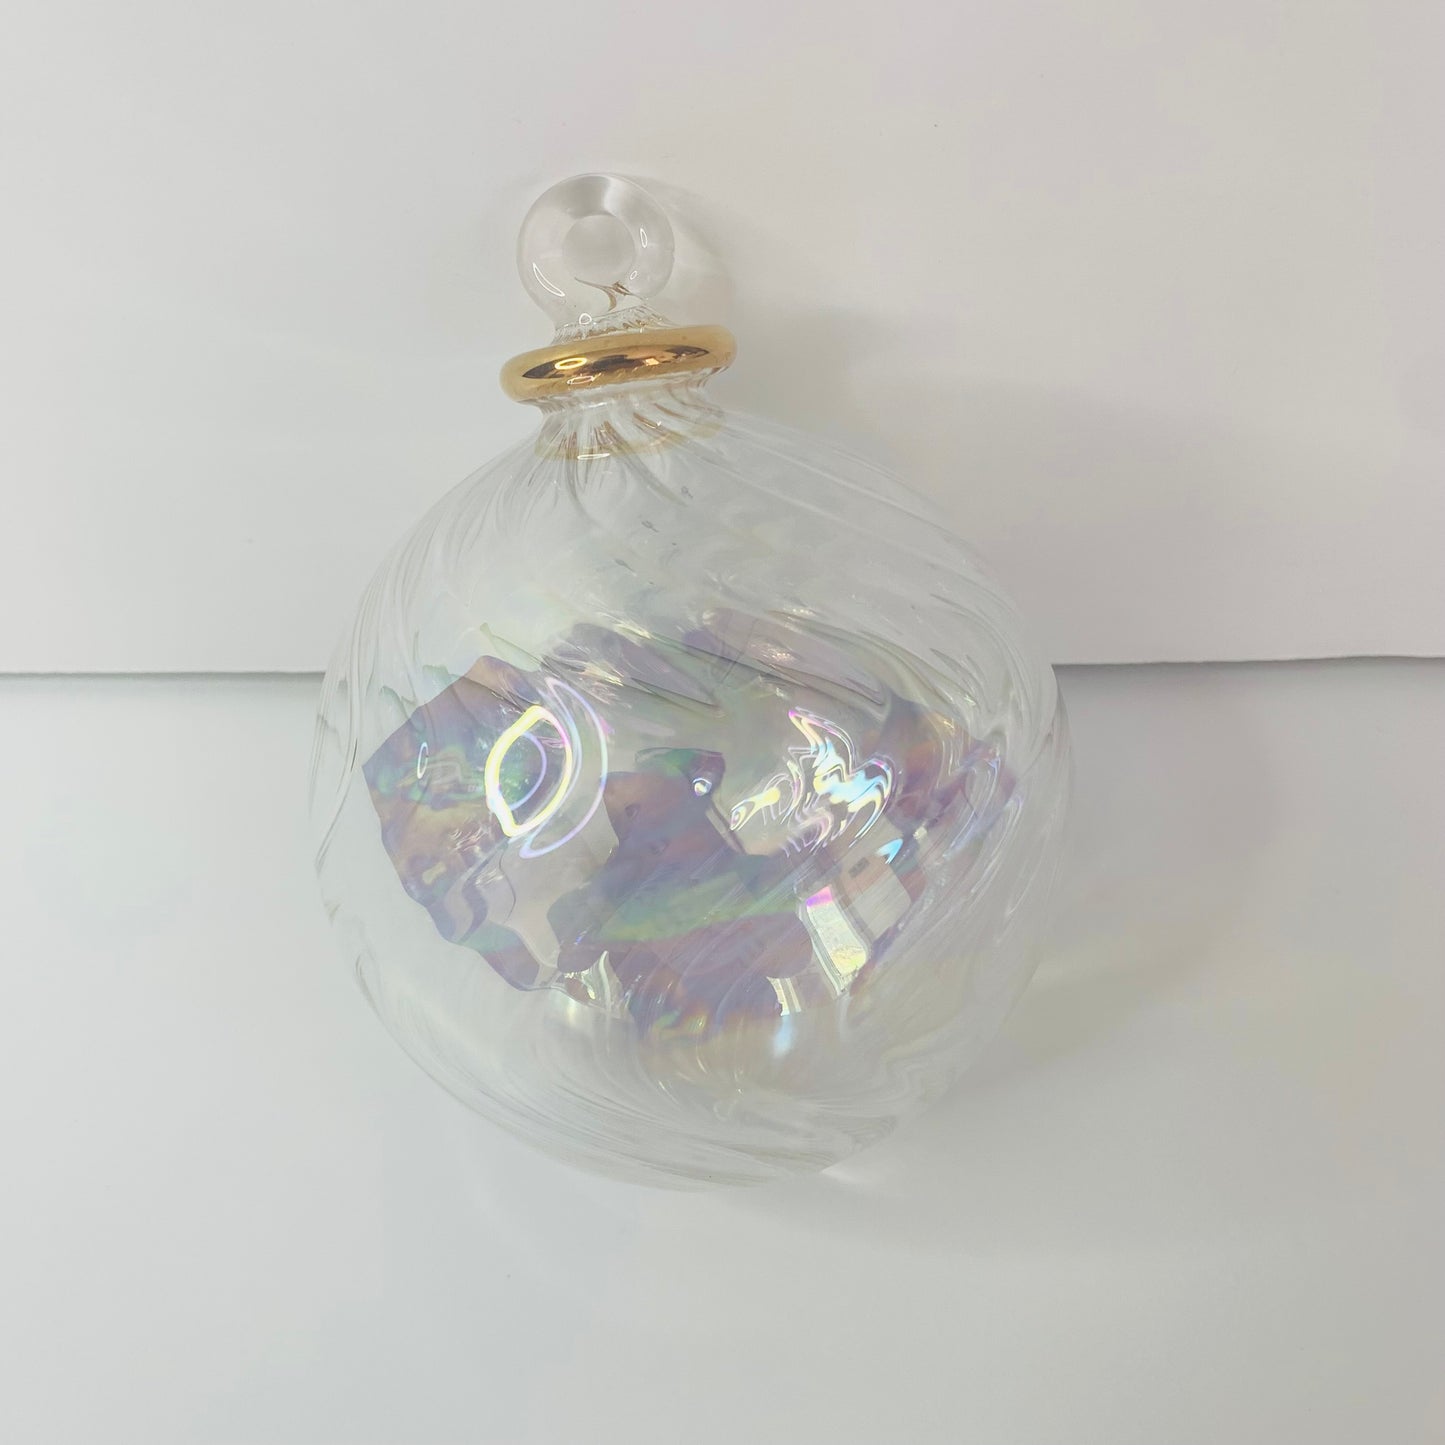 Blown Glass Ornament - Wavy Iridescent